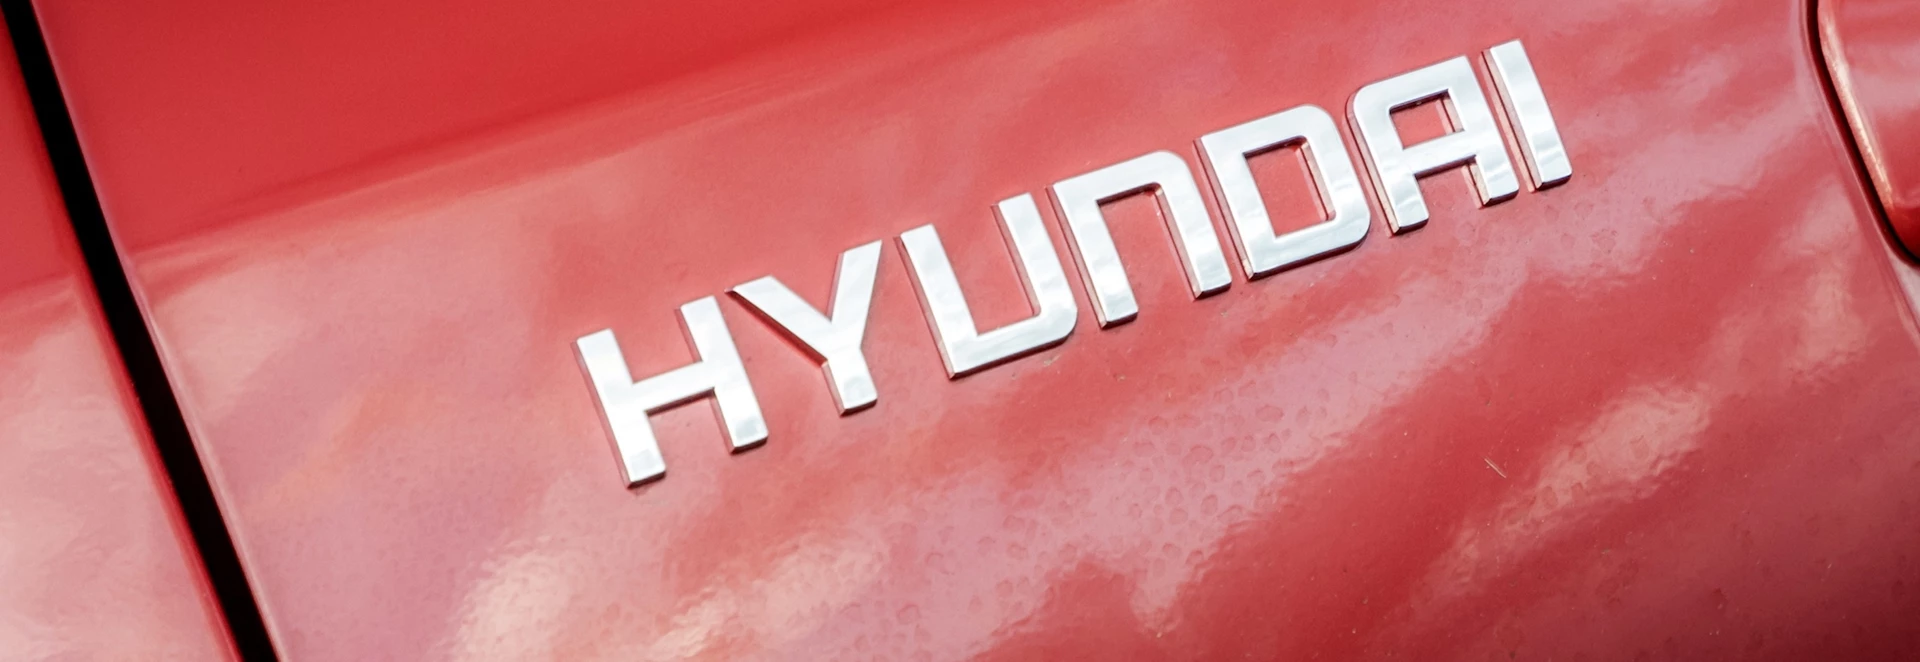 March 2018 sees Hyundai set record sales